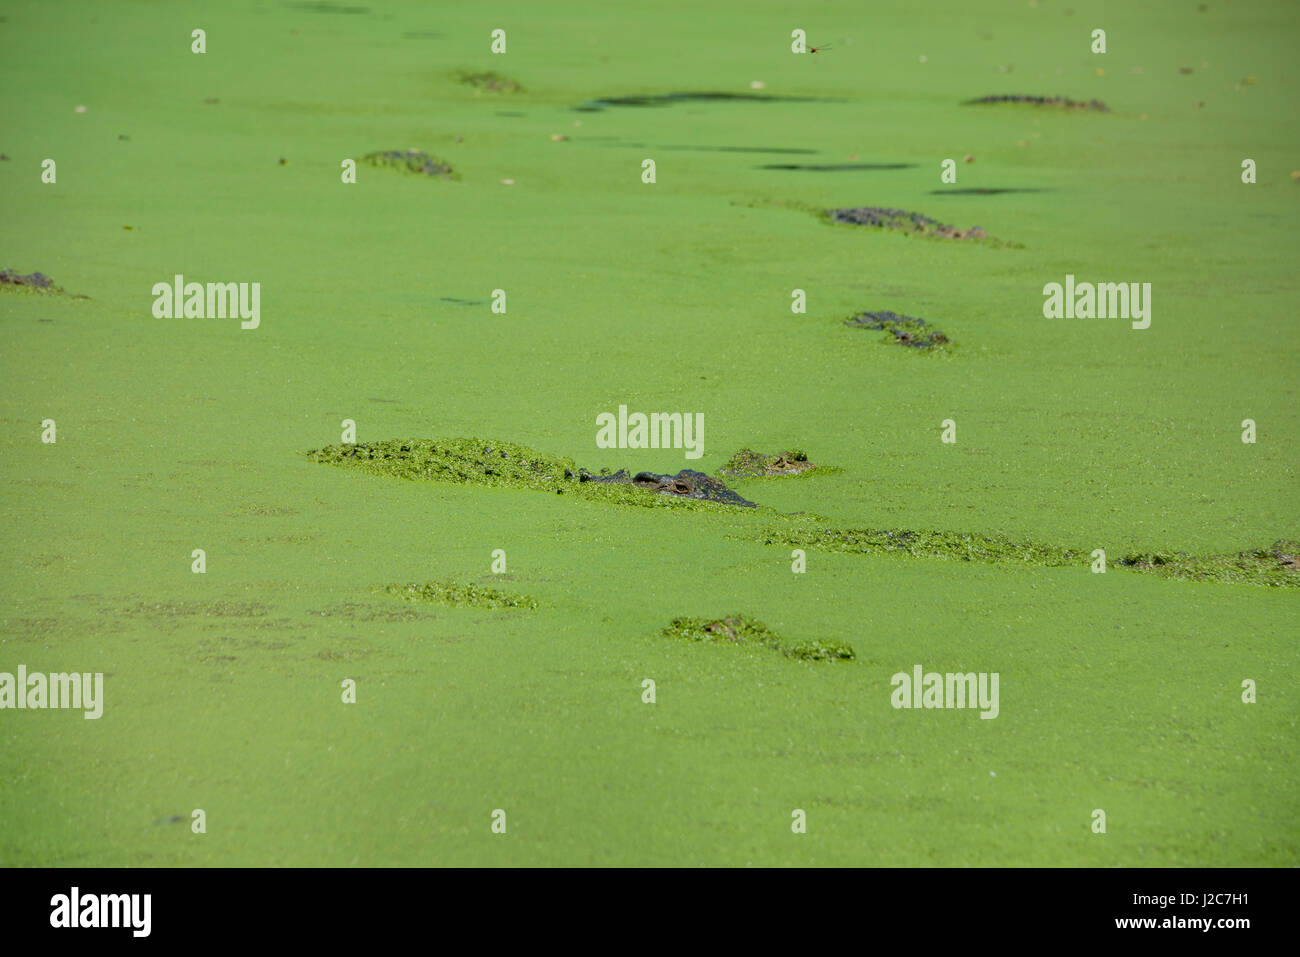 Western Australia, Broome. Malcolm Douglas Crocodile Park. Saltwater crocodiles (Crocodylus porosus) in duckweed covered pond (introduced species, Lemna minuta). (Large format sizes available) Stock Photo